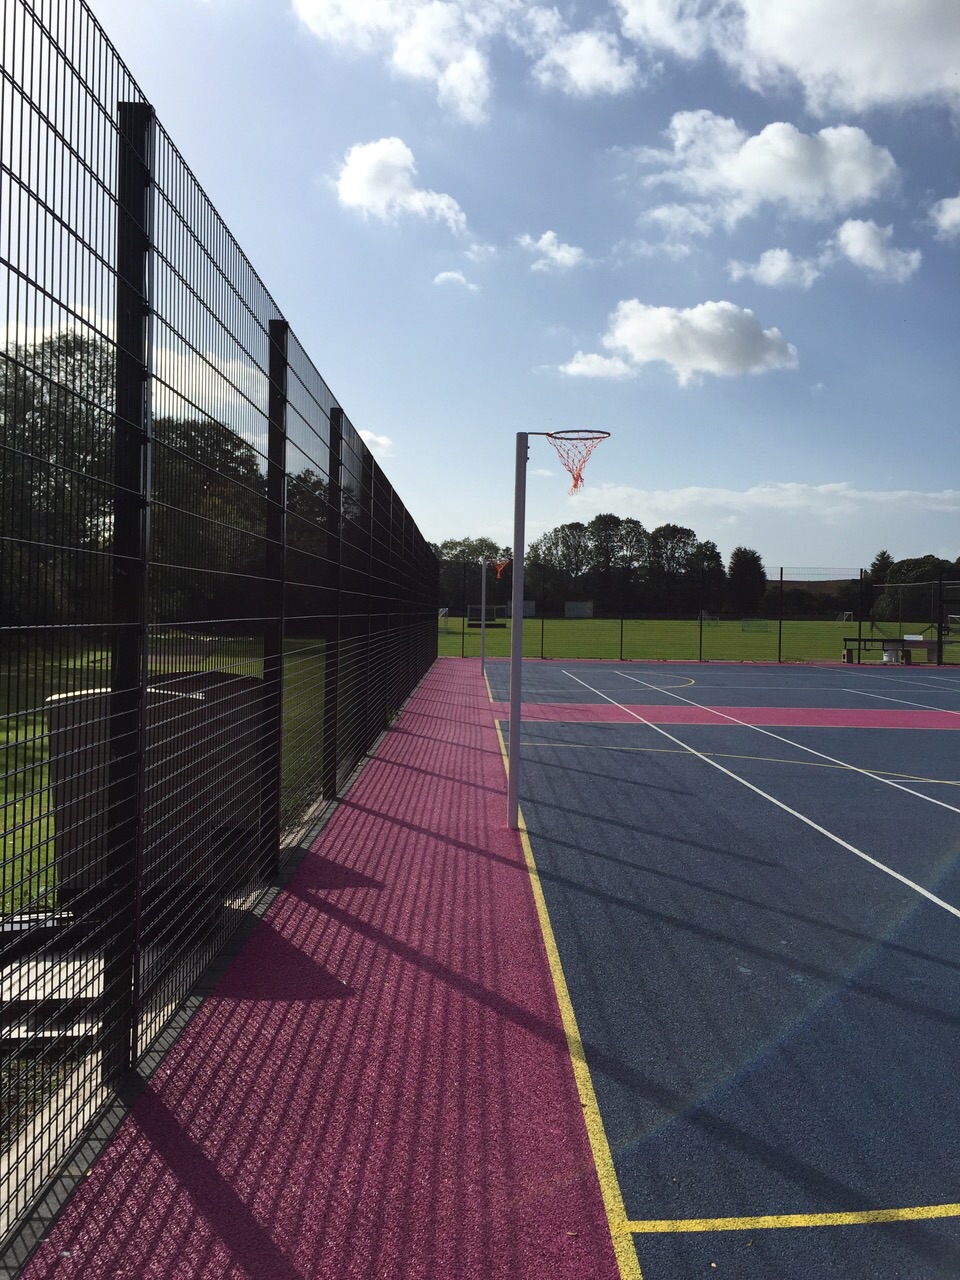 Picture of Alleyn Court Preparatory School Tennis Courts